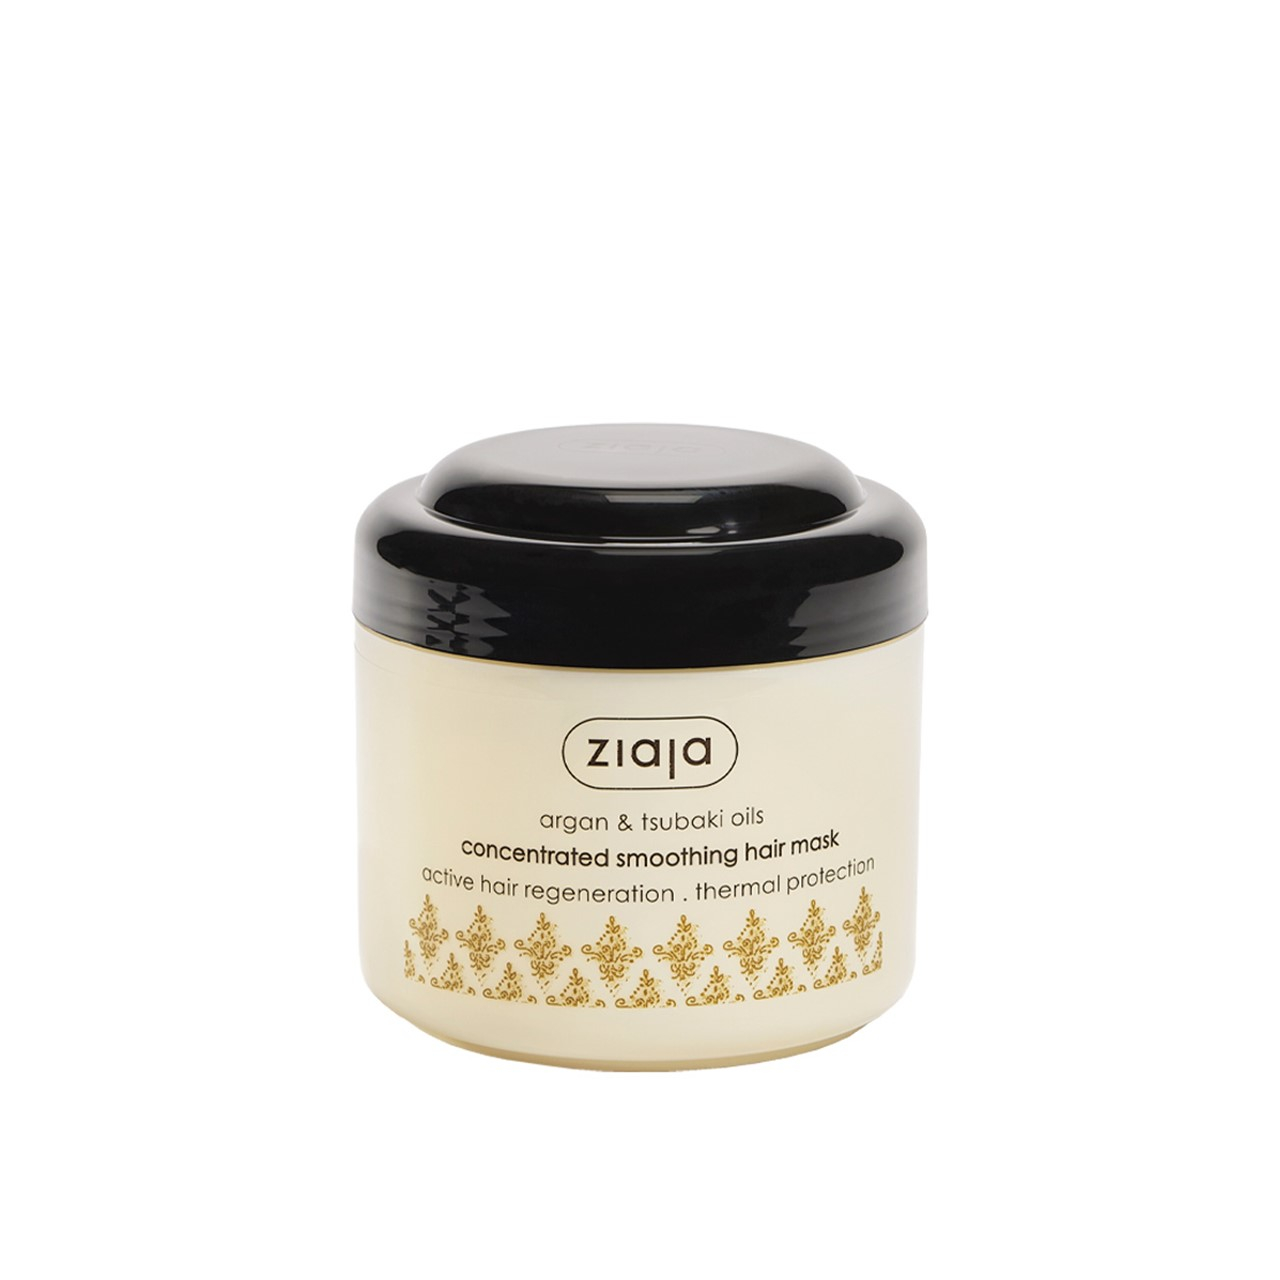 Ziaja Argan & Tsubaki Oils Concentrated Smoothing Hair Mask 200ml (7.0 fl oz)